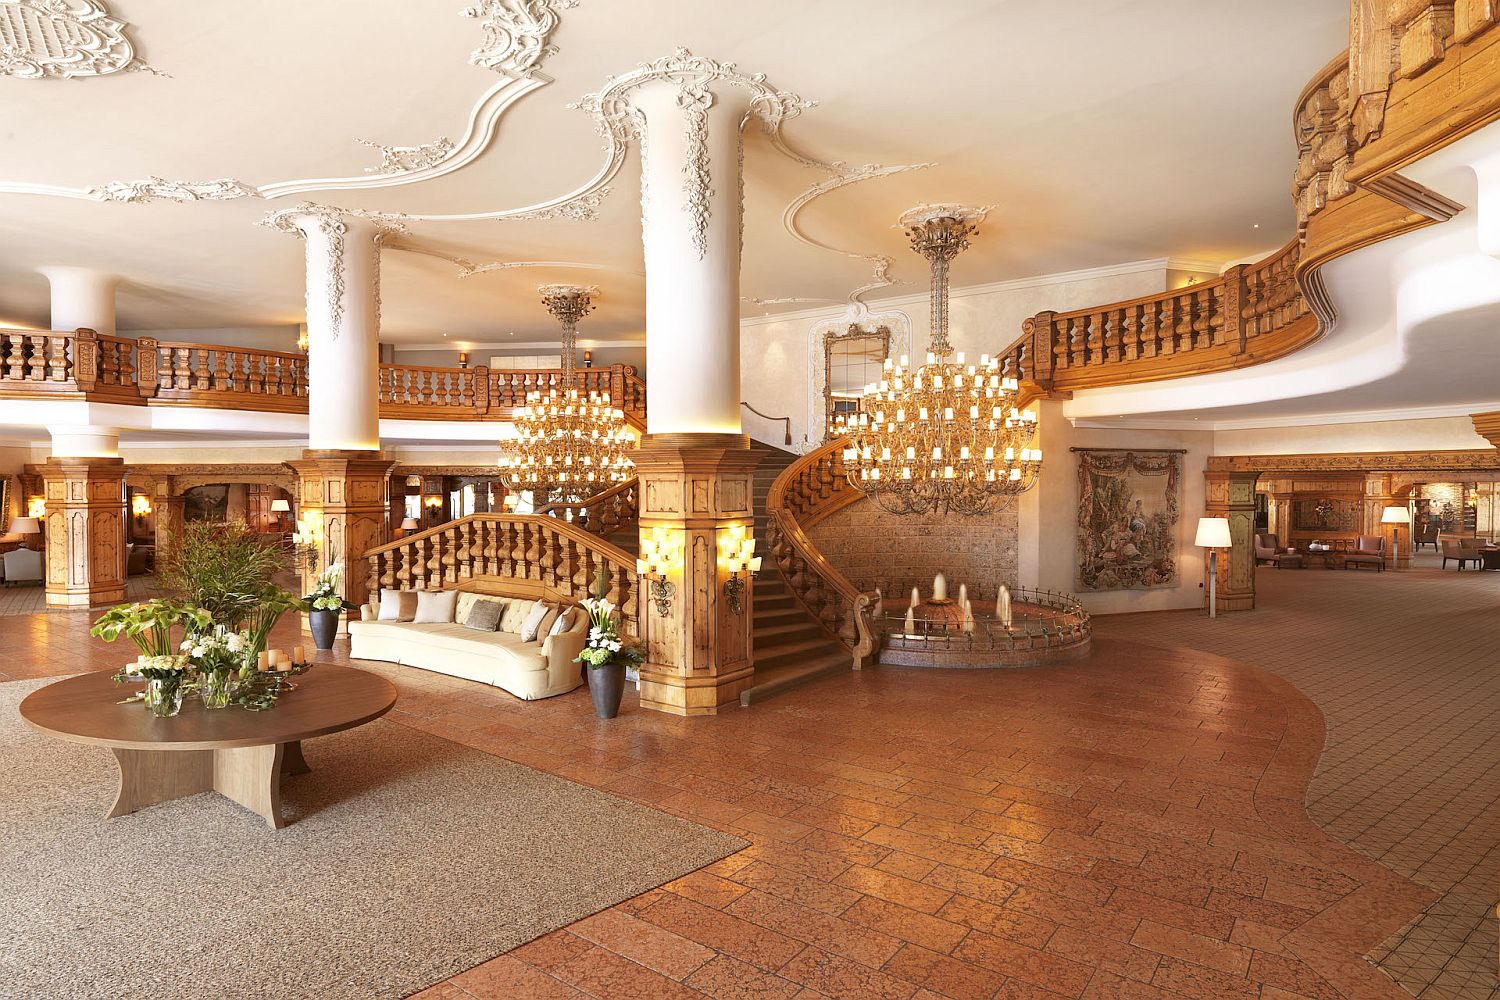 Grand lobby of the Interalpen-Hotel Tyrol